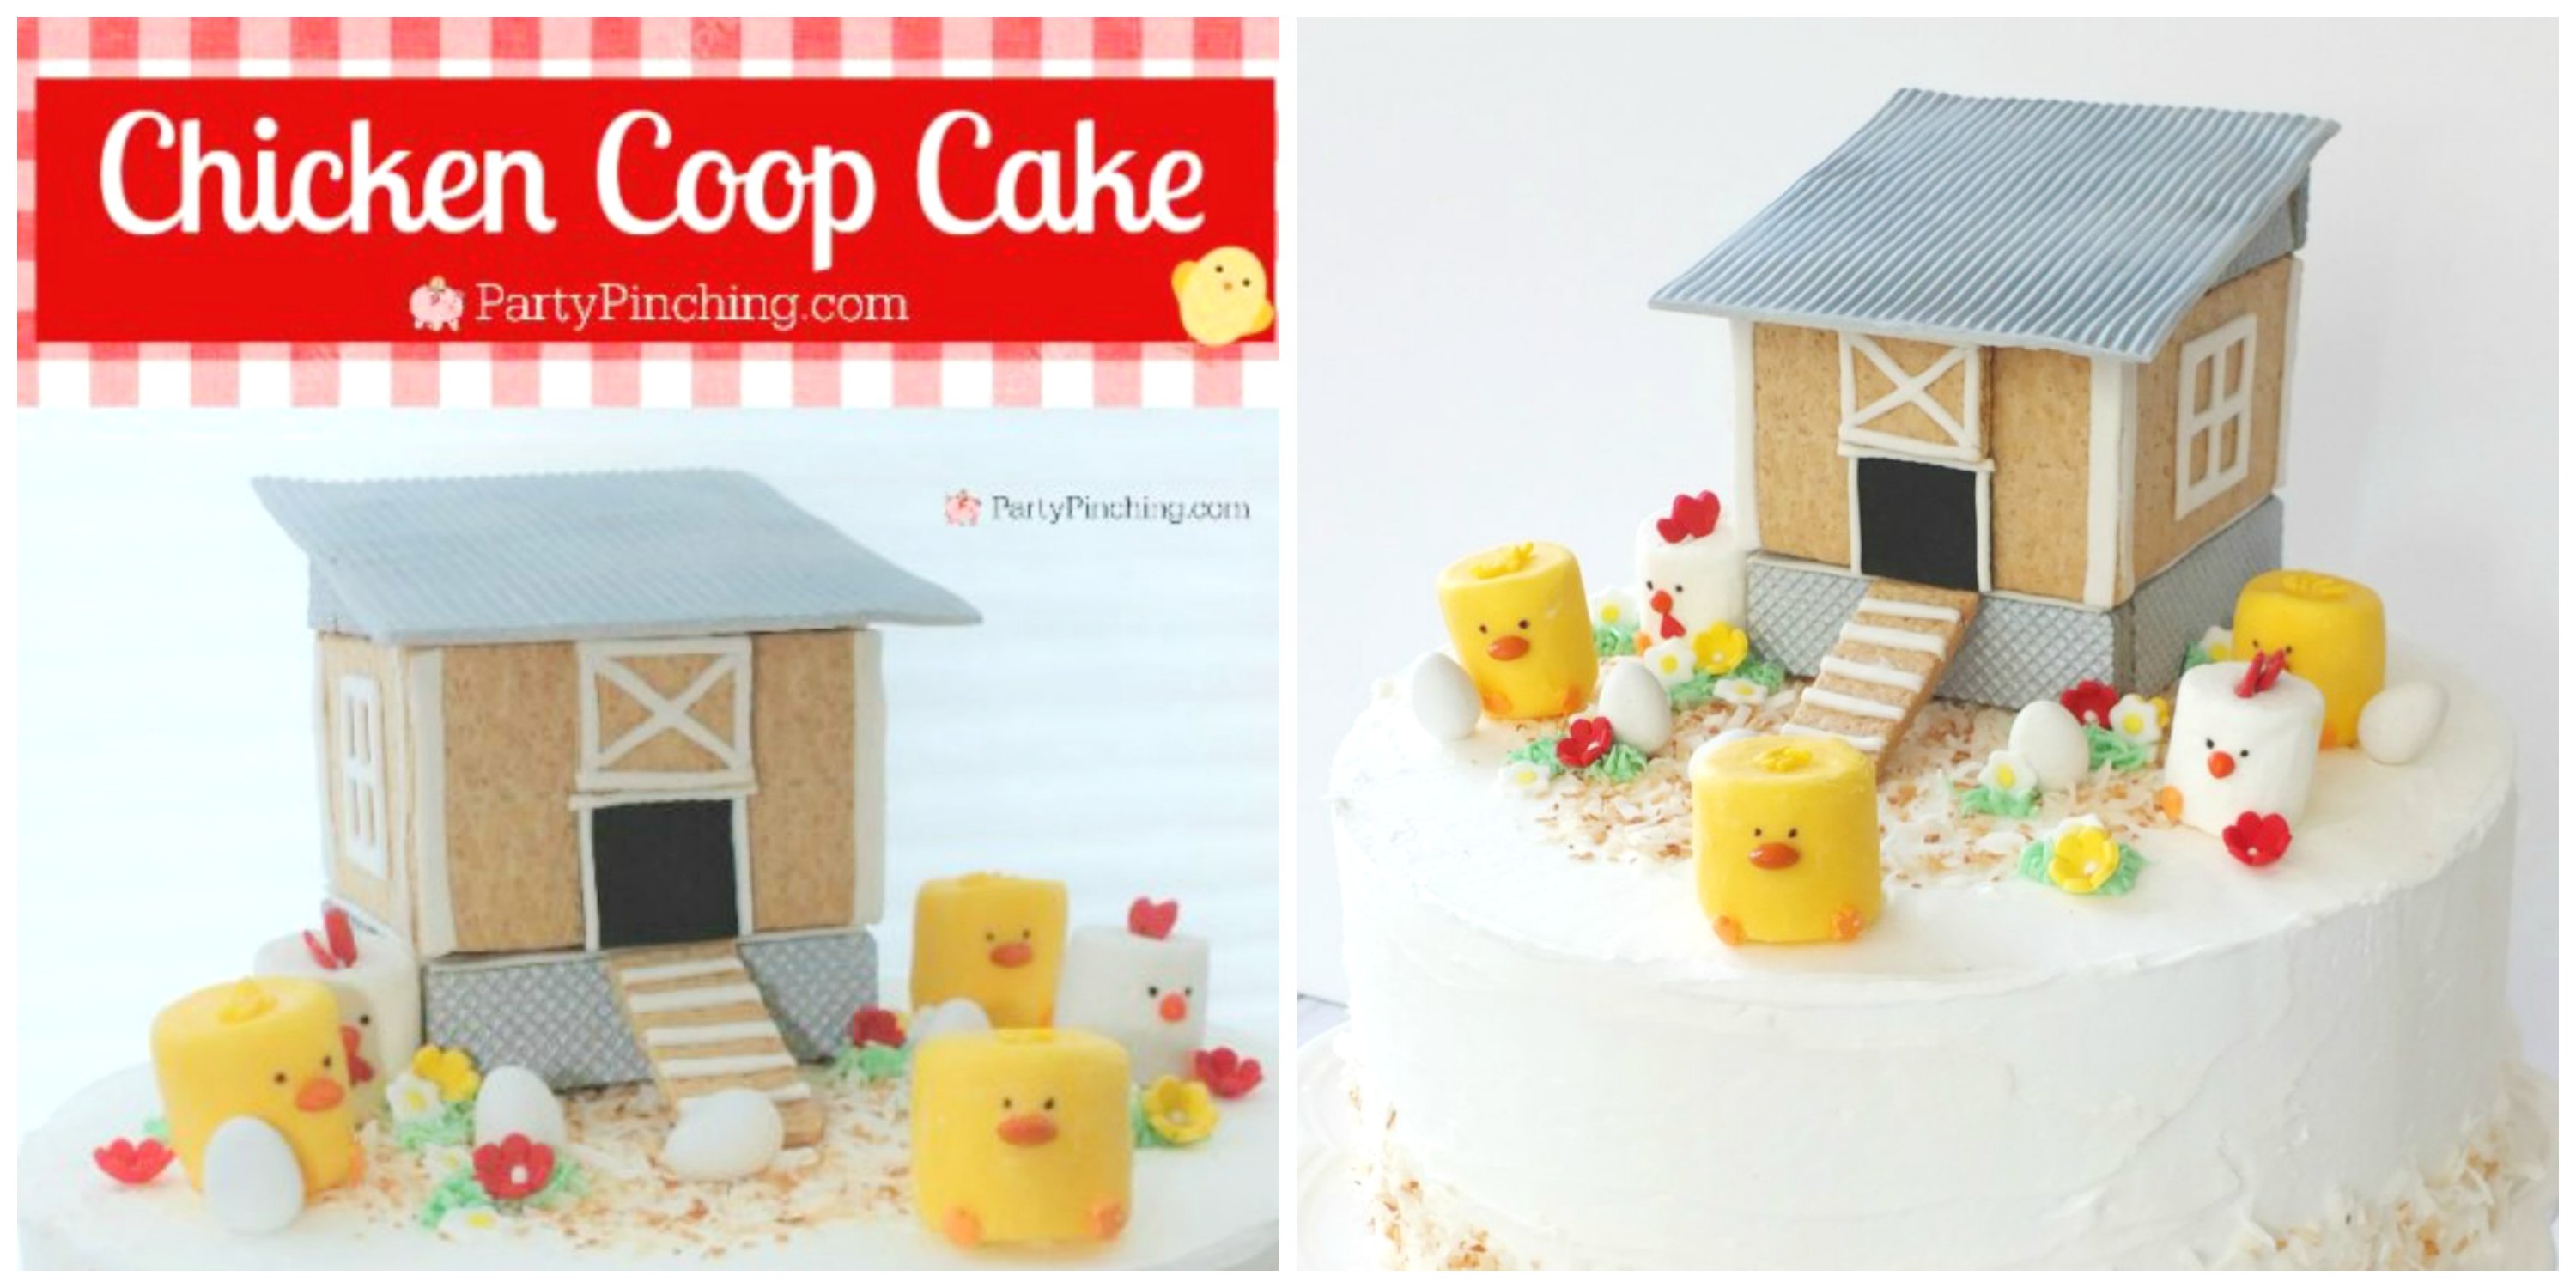 Bakery | Coop Cake